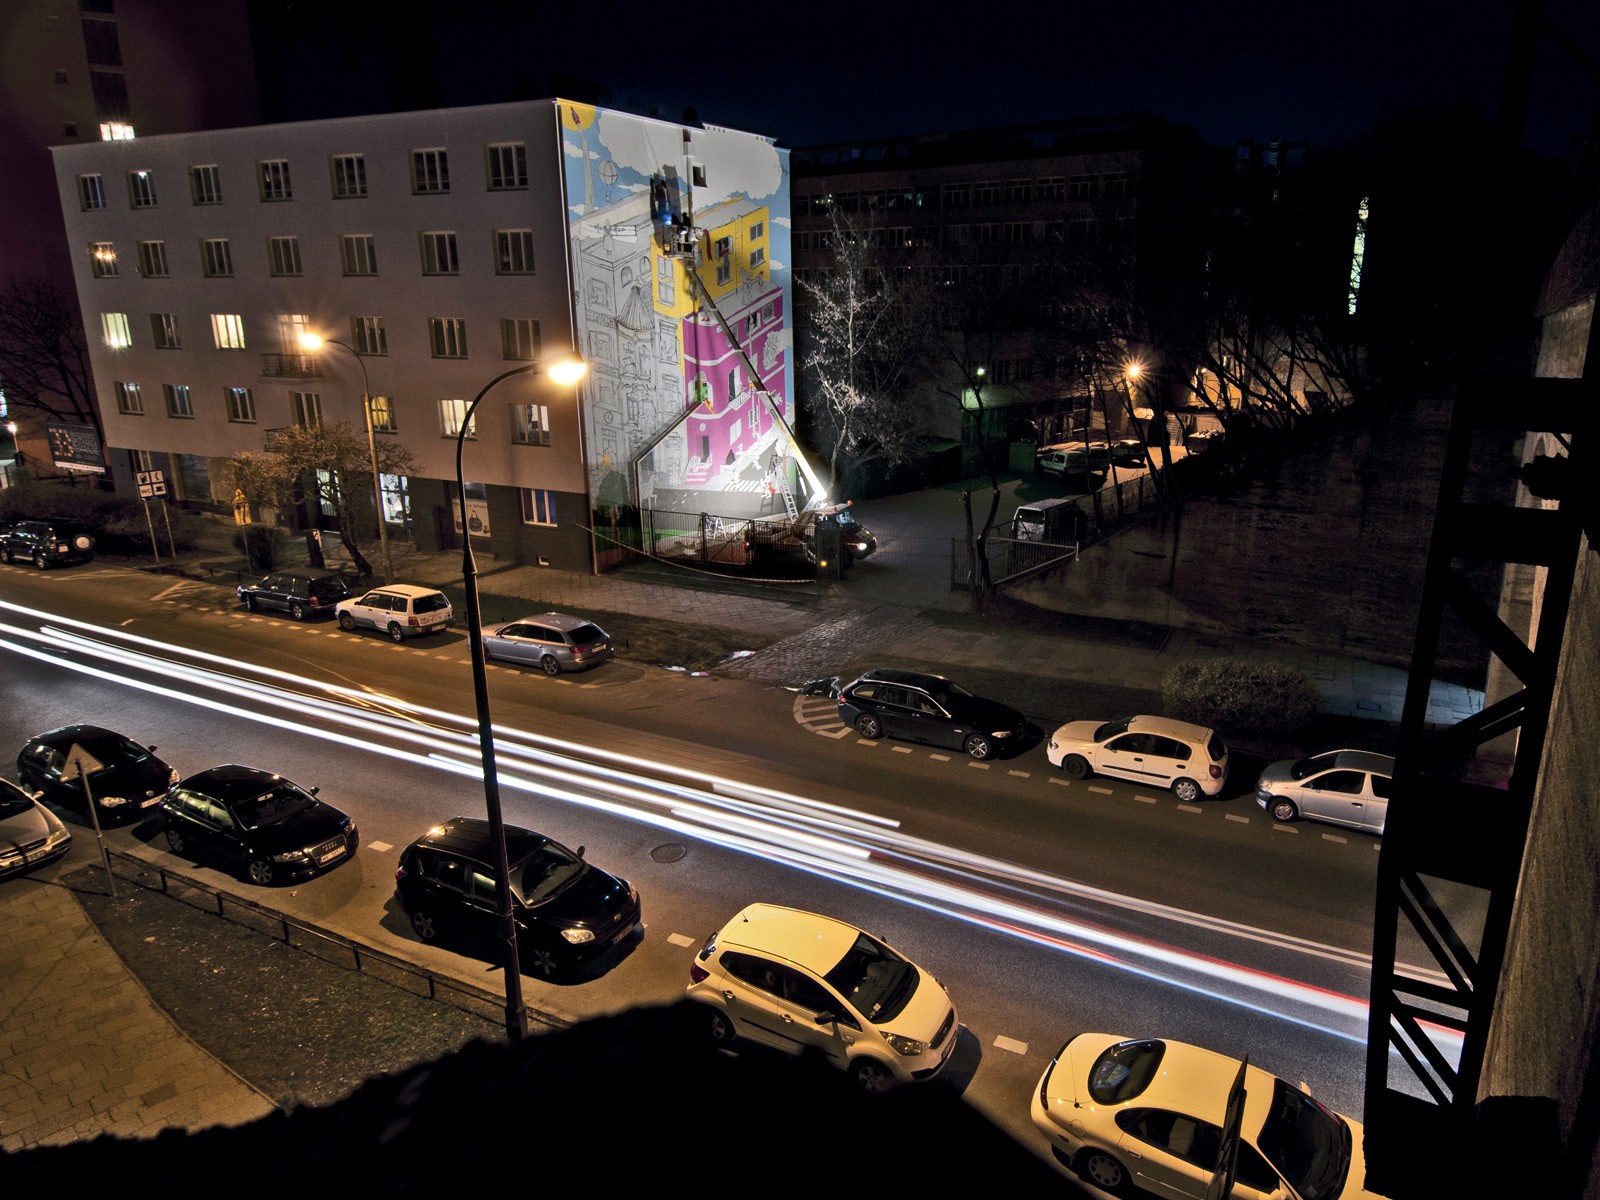 Empik advertising mural It's about reading - Warsaw Powisle Solec 85 street | World Book Day | Portfolio